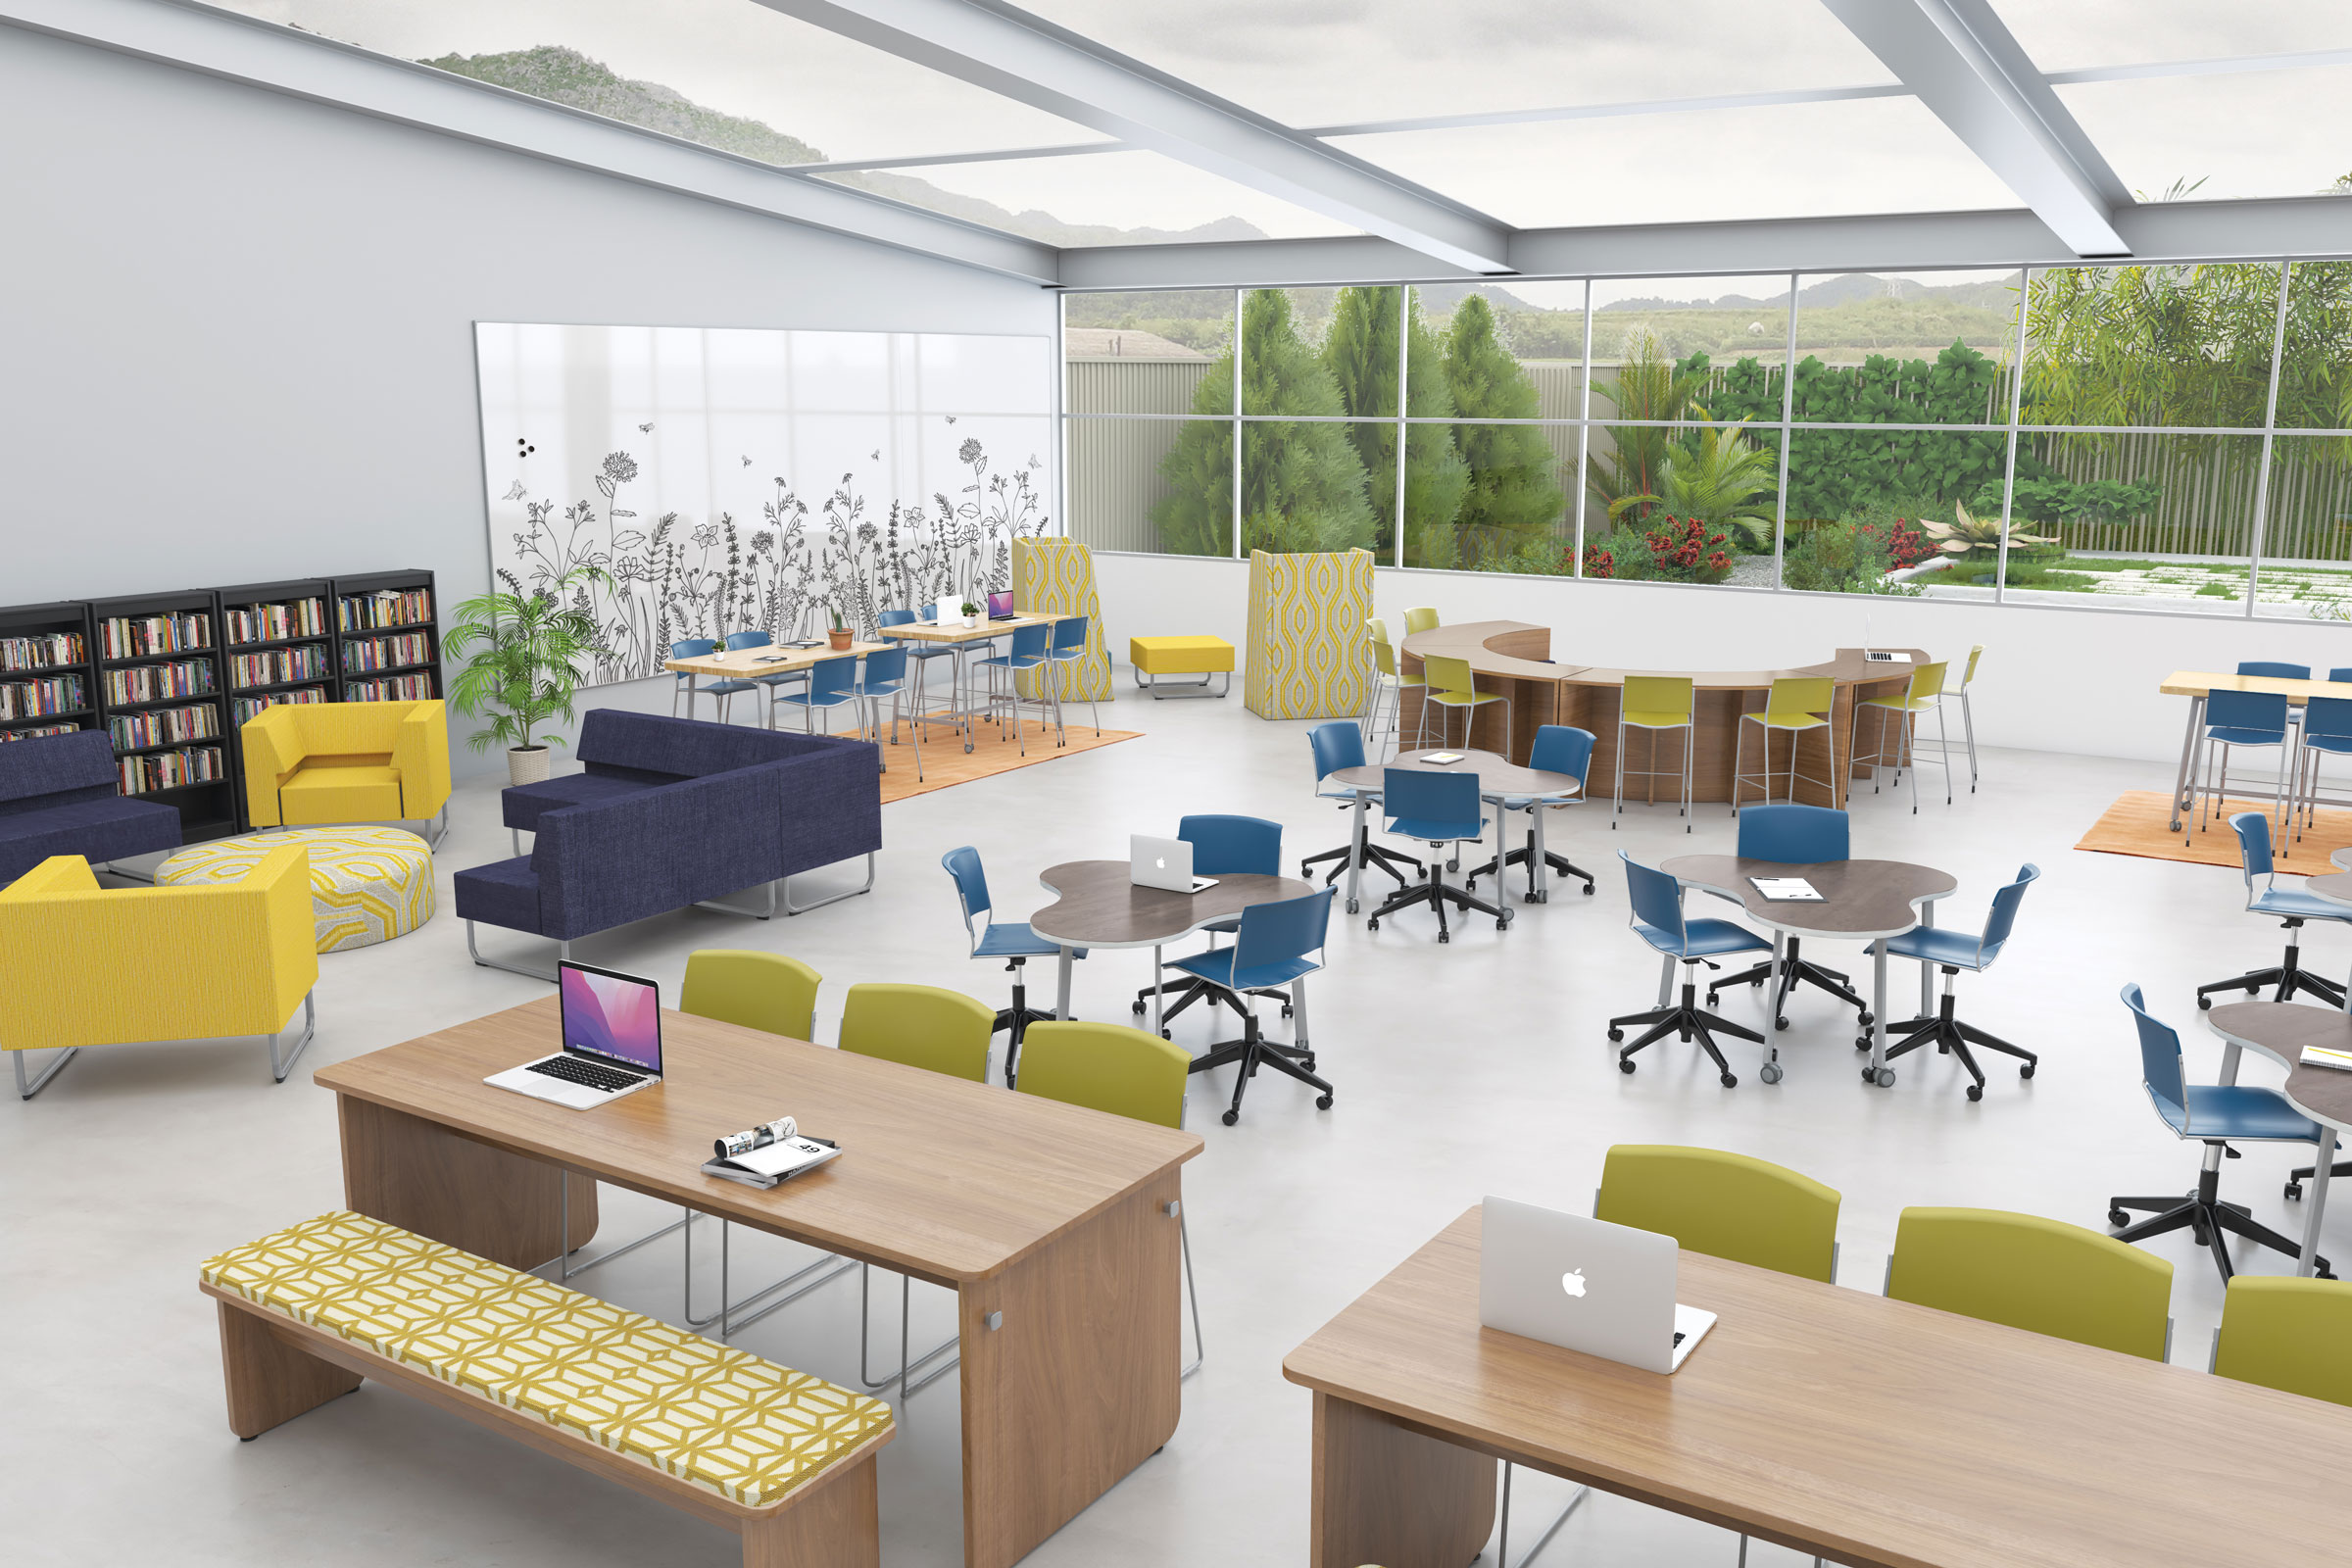 Modern Classroom Furniture is More Than Desks